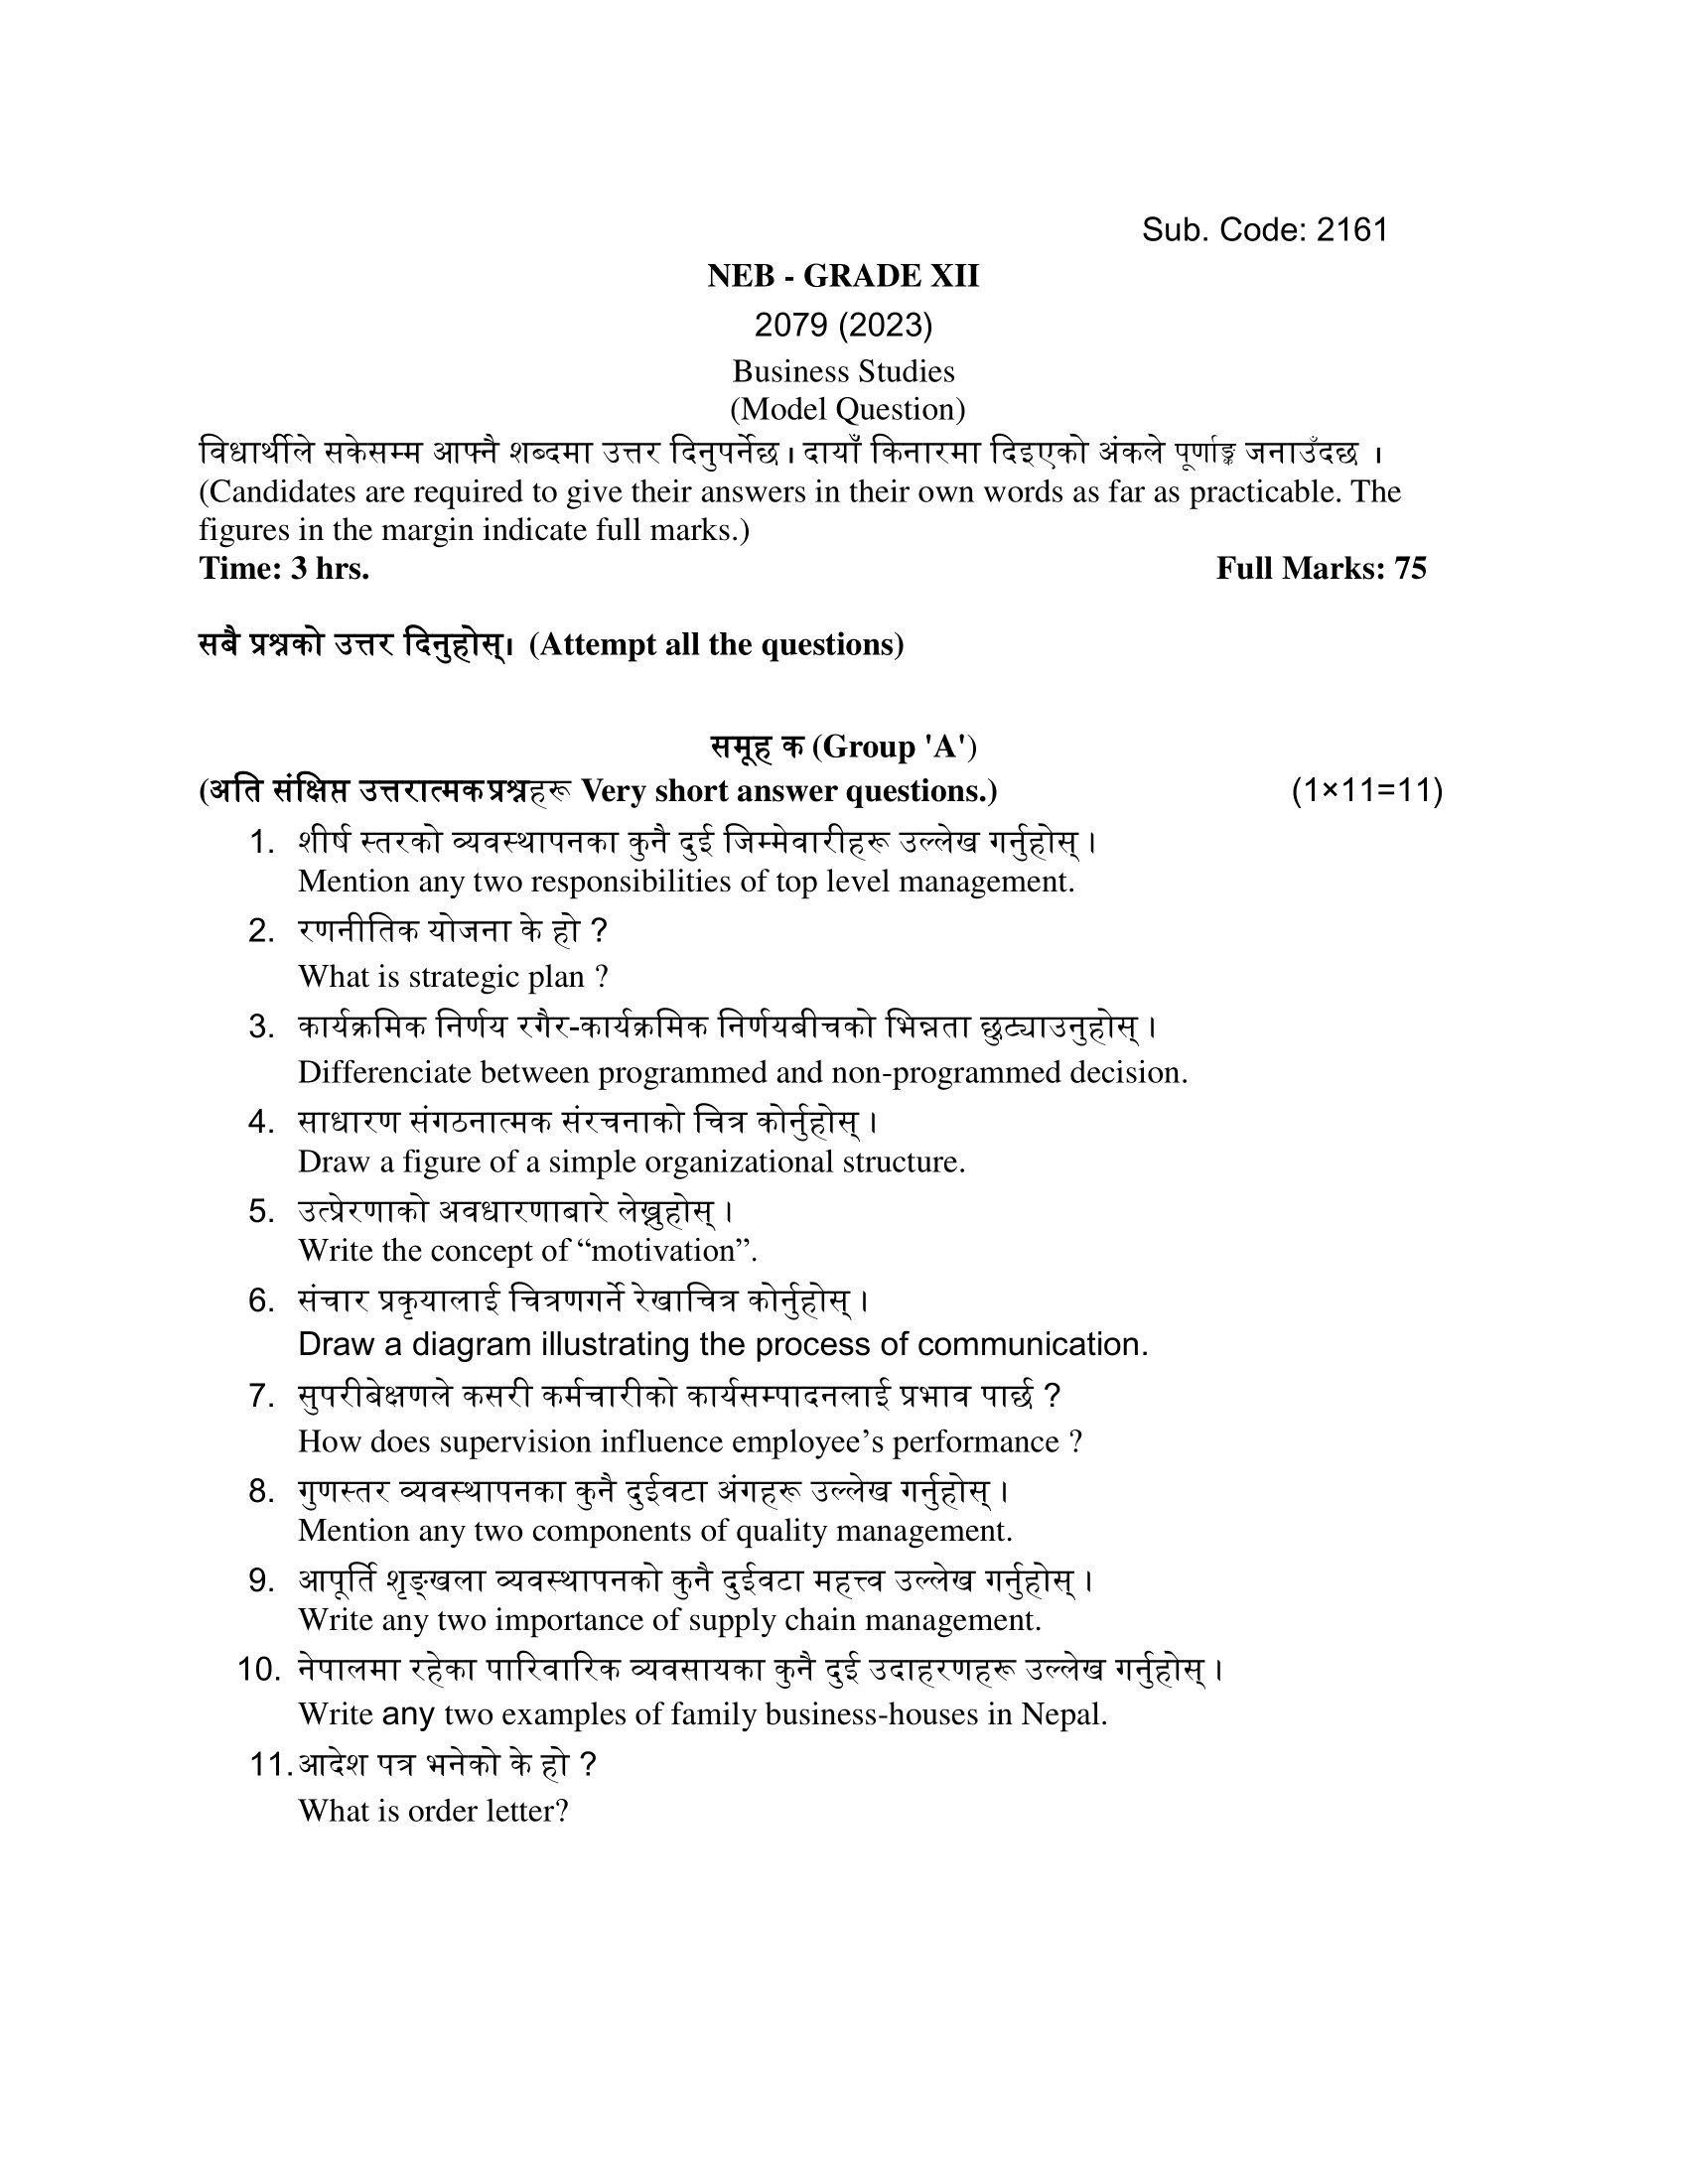 NEB Class 12 Business Studies Model Question Paper 2080